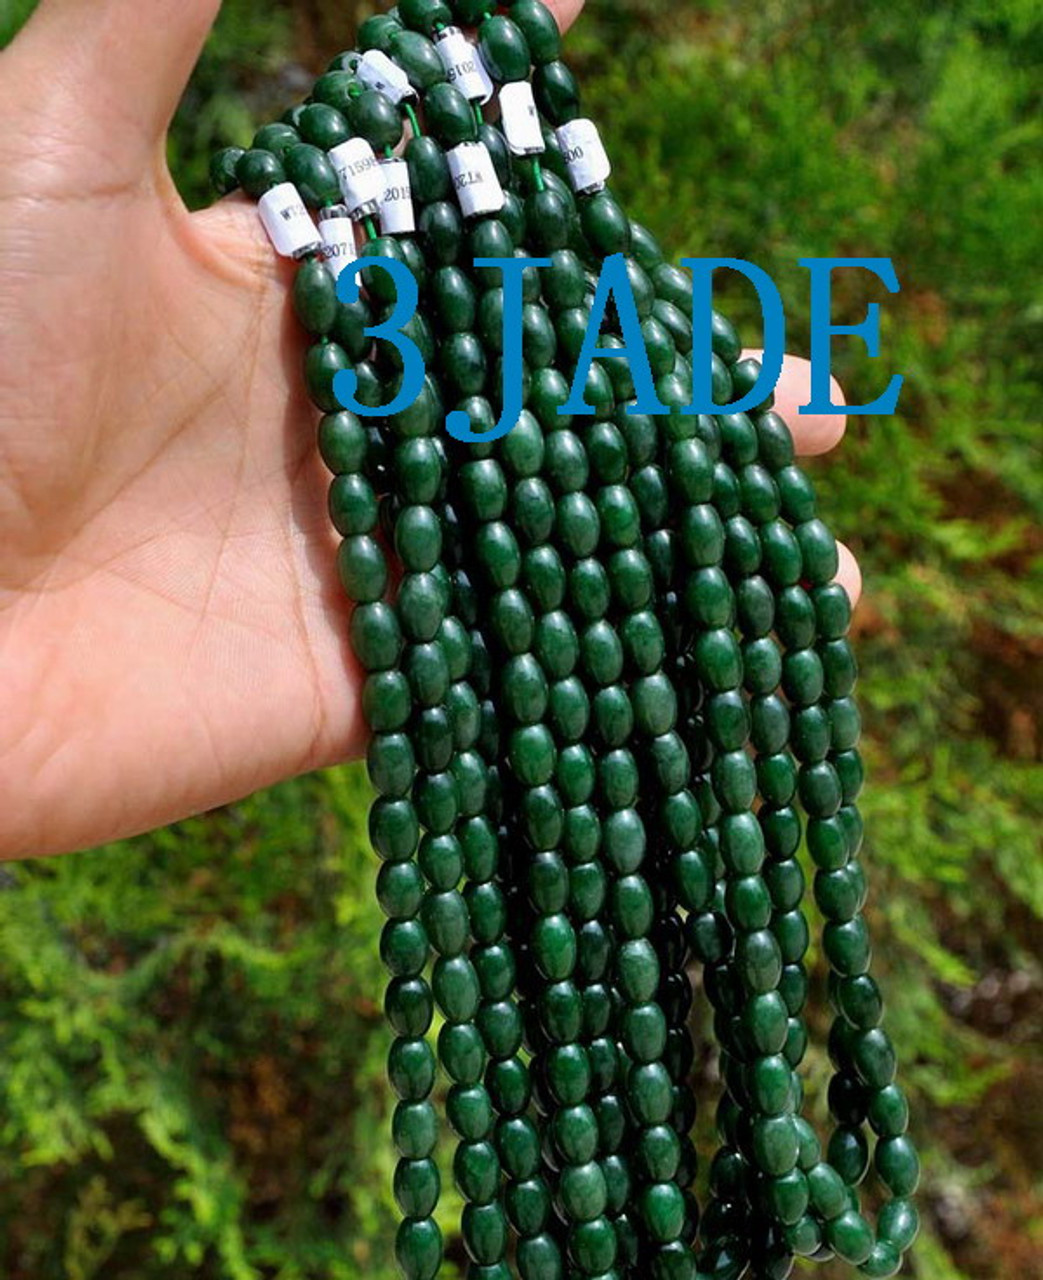 jade beads